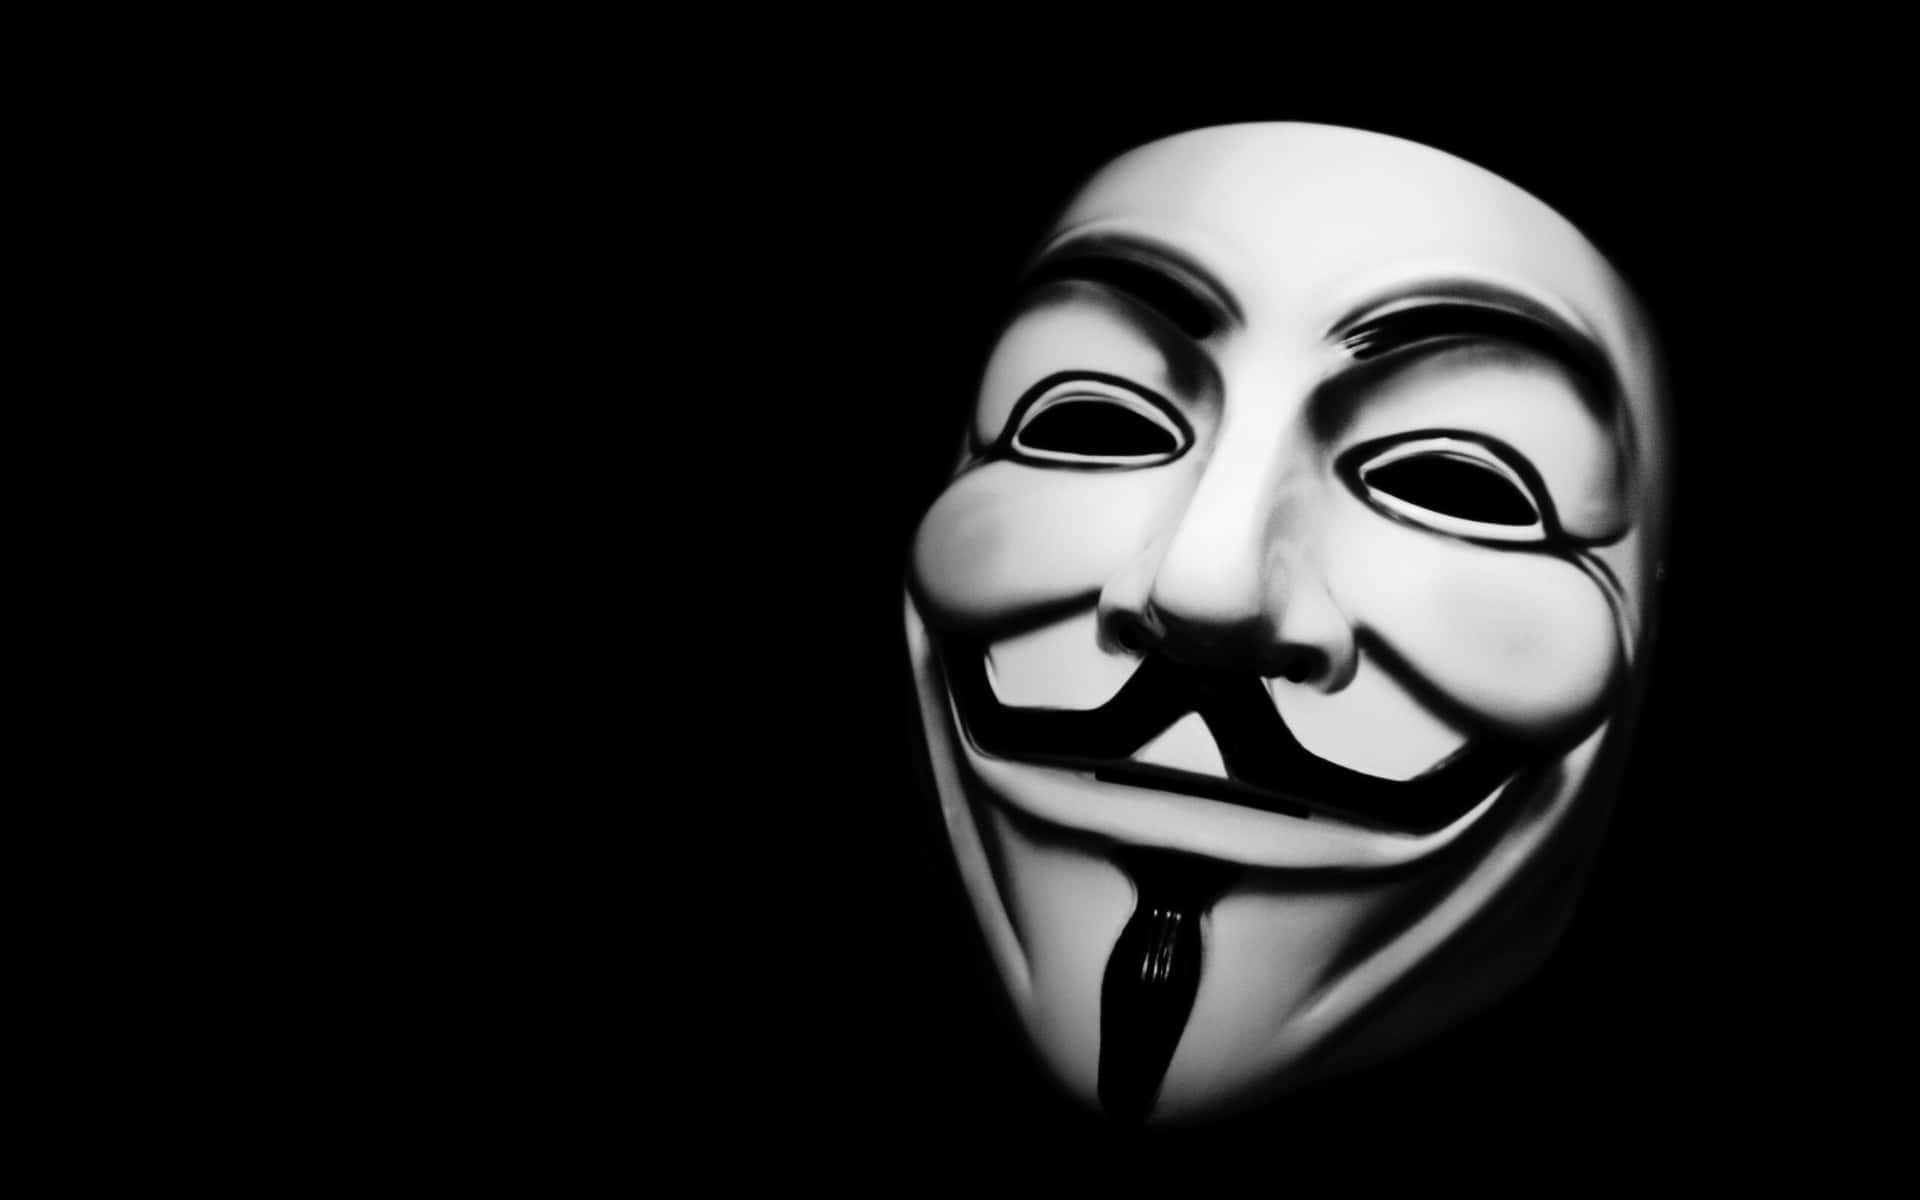 4k Mask Black&White Anonymous Hacker Wallpaper